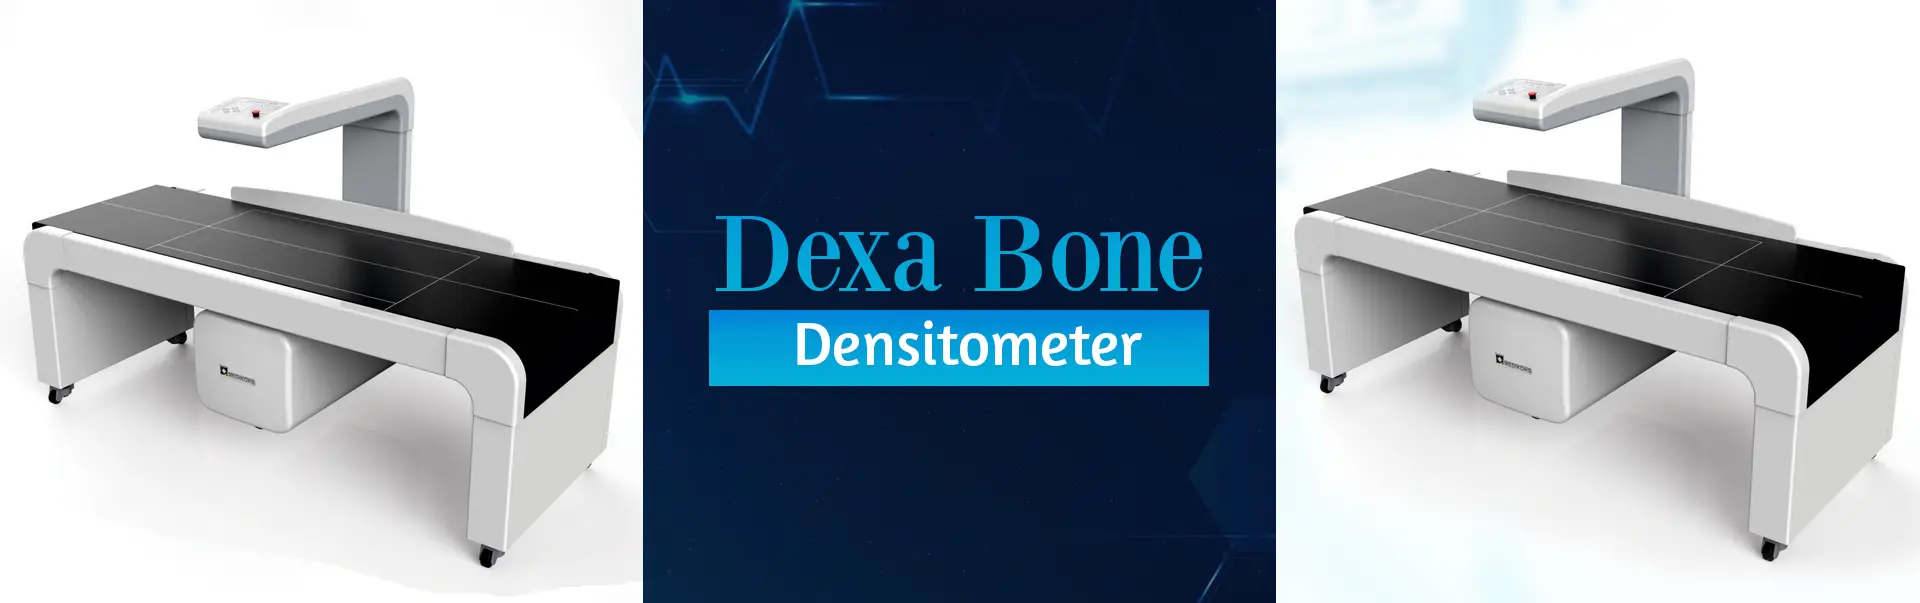 Dexa Bone Densitometer Manufacturers in Warangal